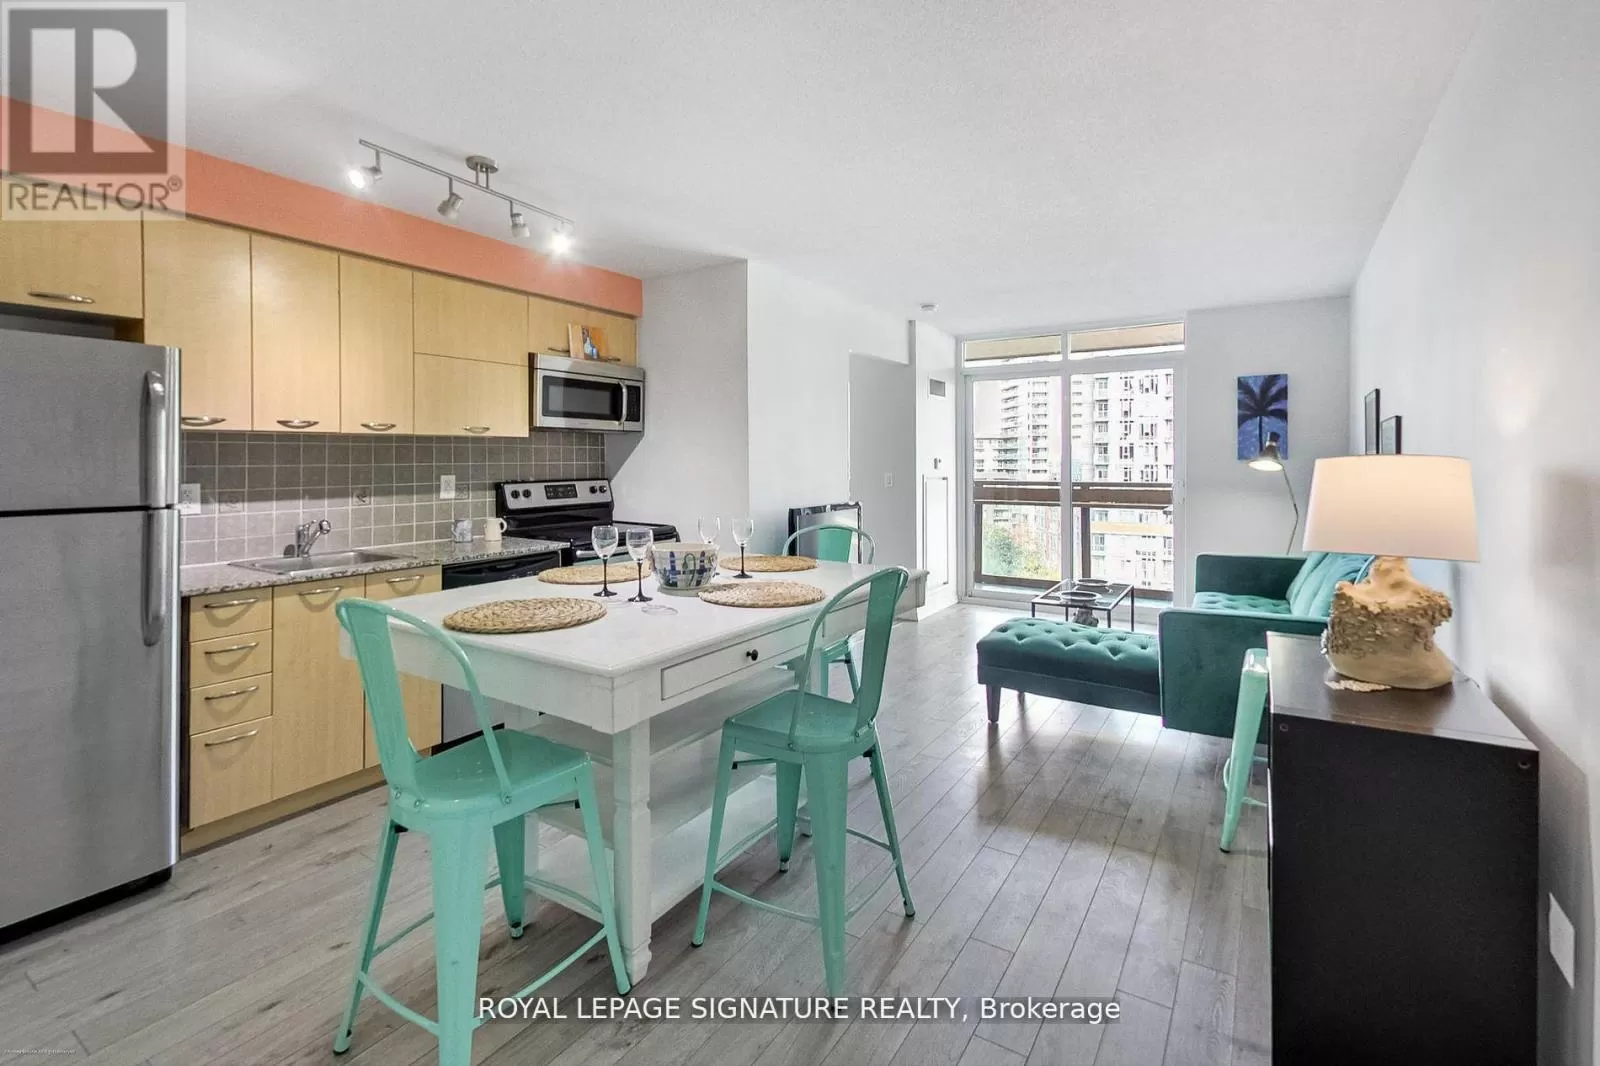 Apartment for rent: 926 - 38 Joe Shuster Way, Toronto, Ontario M6K 0A5